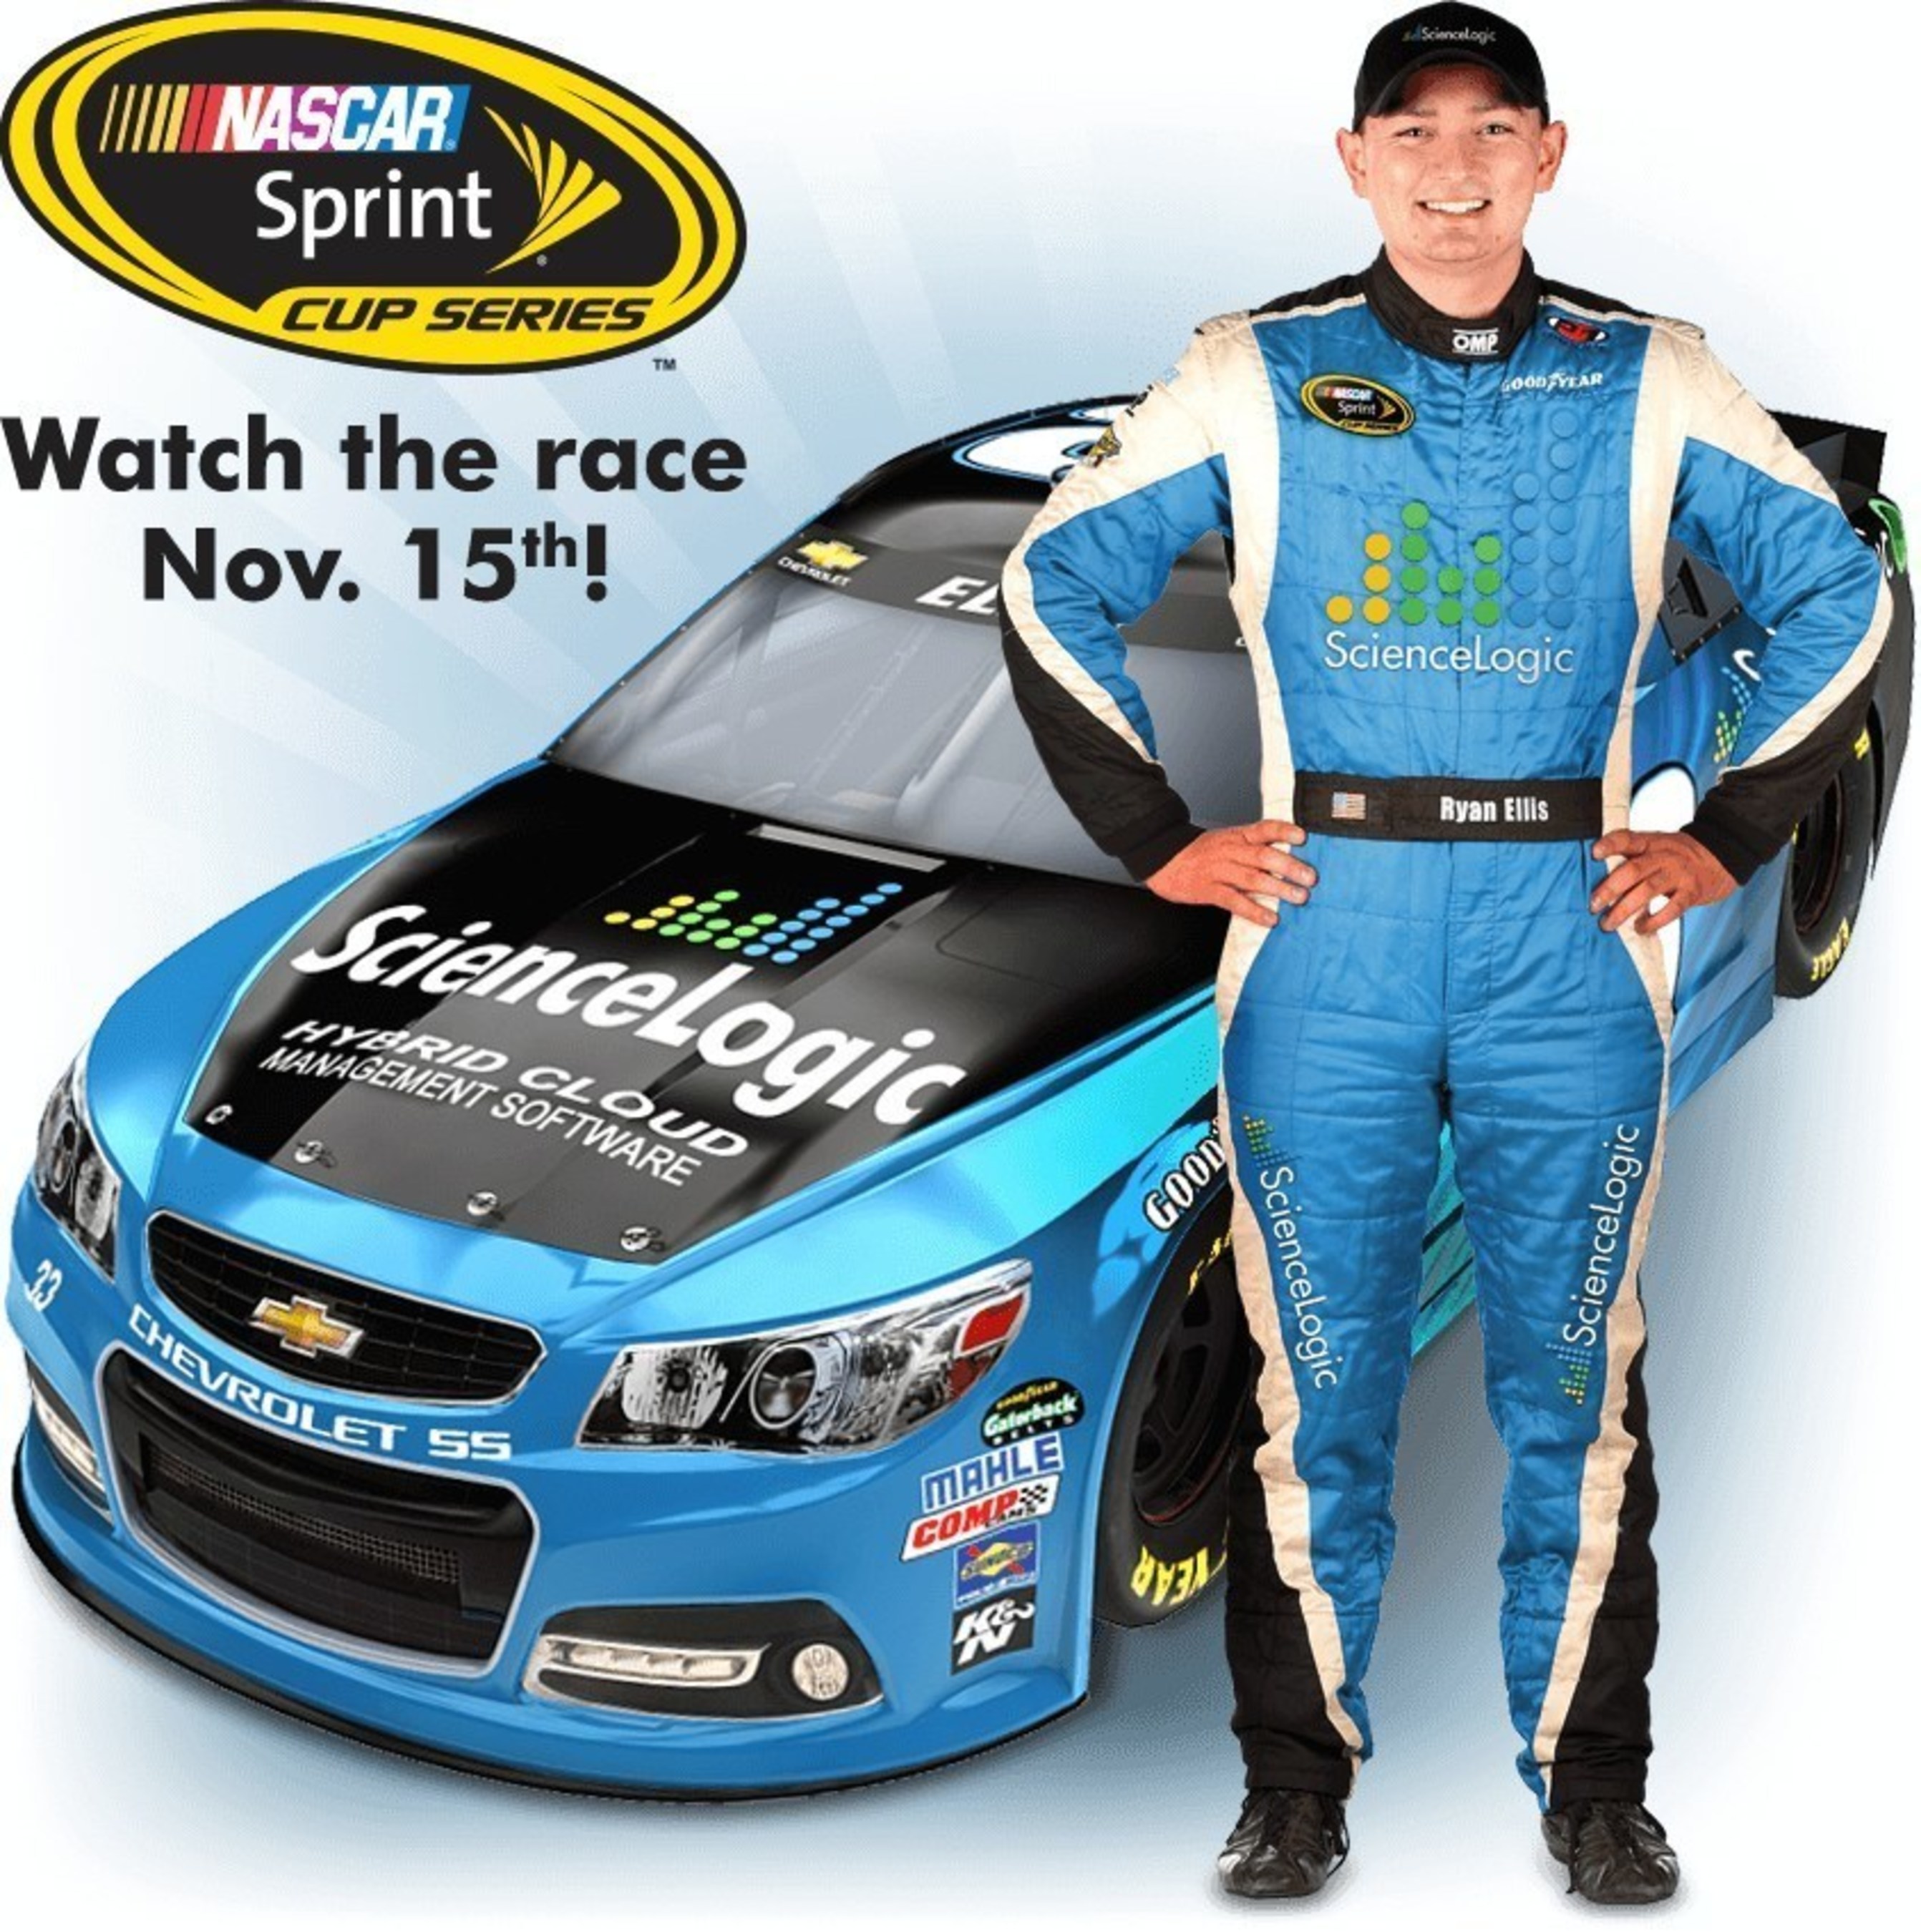 ScienceLogic and Ryan Ellis make their NASCAR Sprint Cup Series debut live on NBC on November 15.